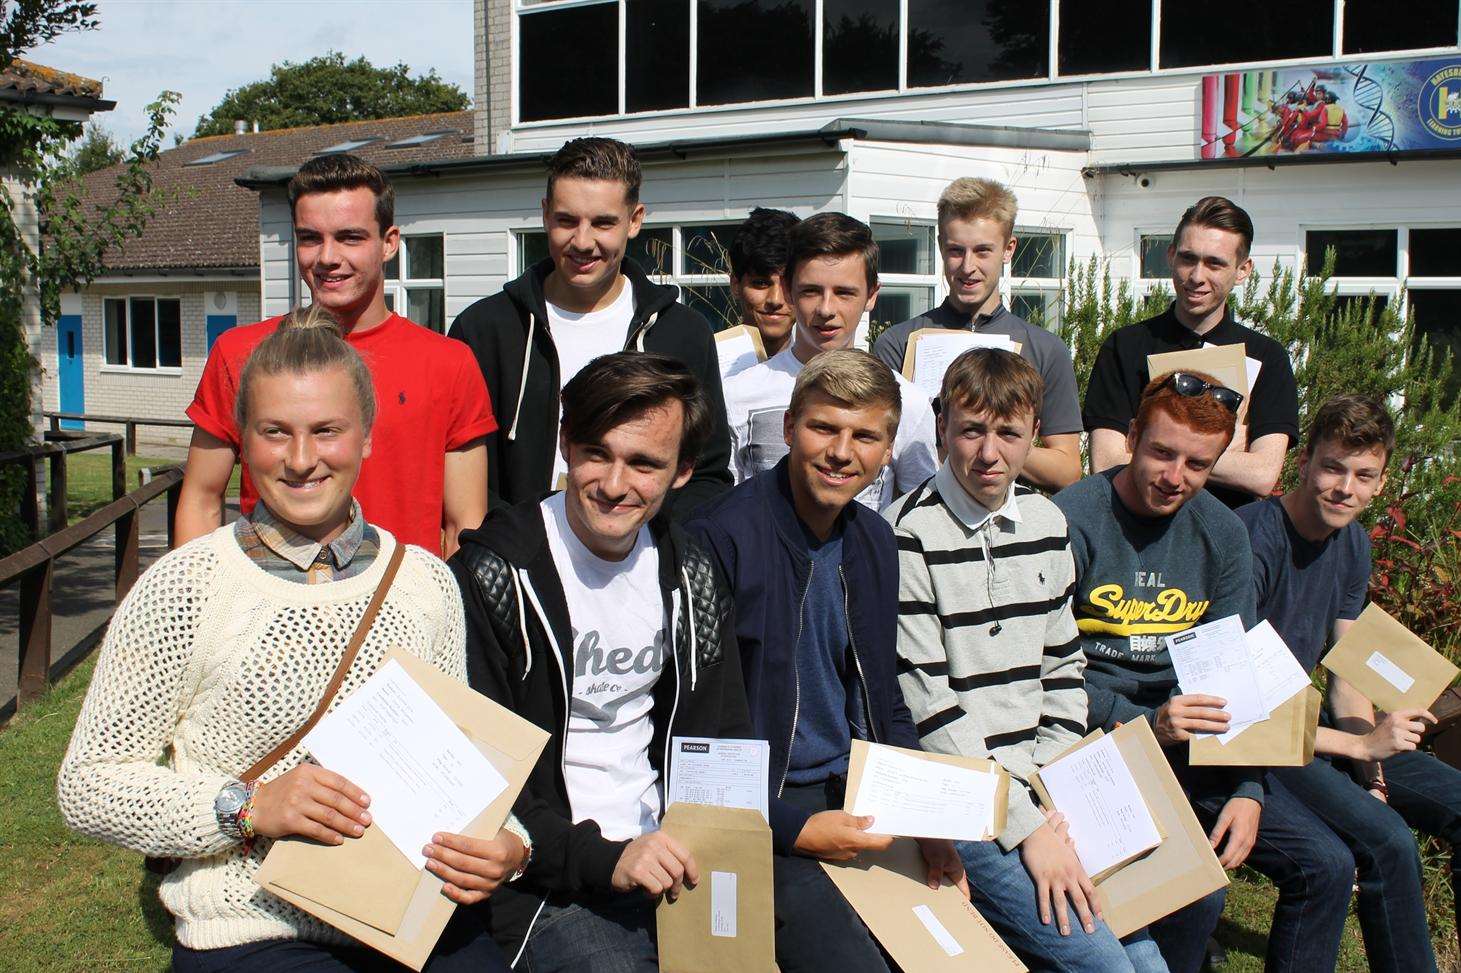 Pupils at Hayesbrook School in Tonbridge set a new record